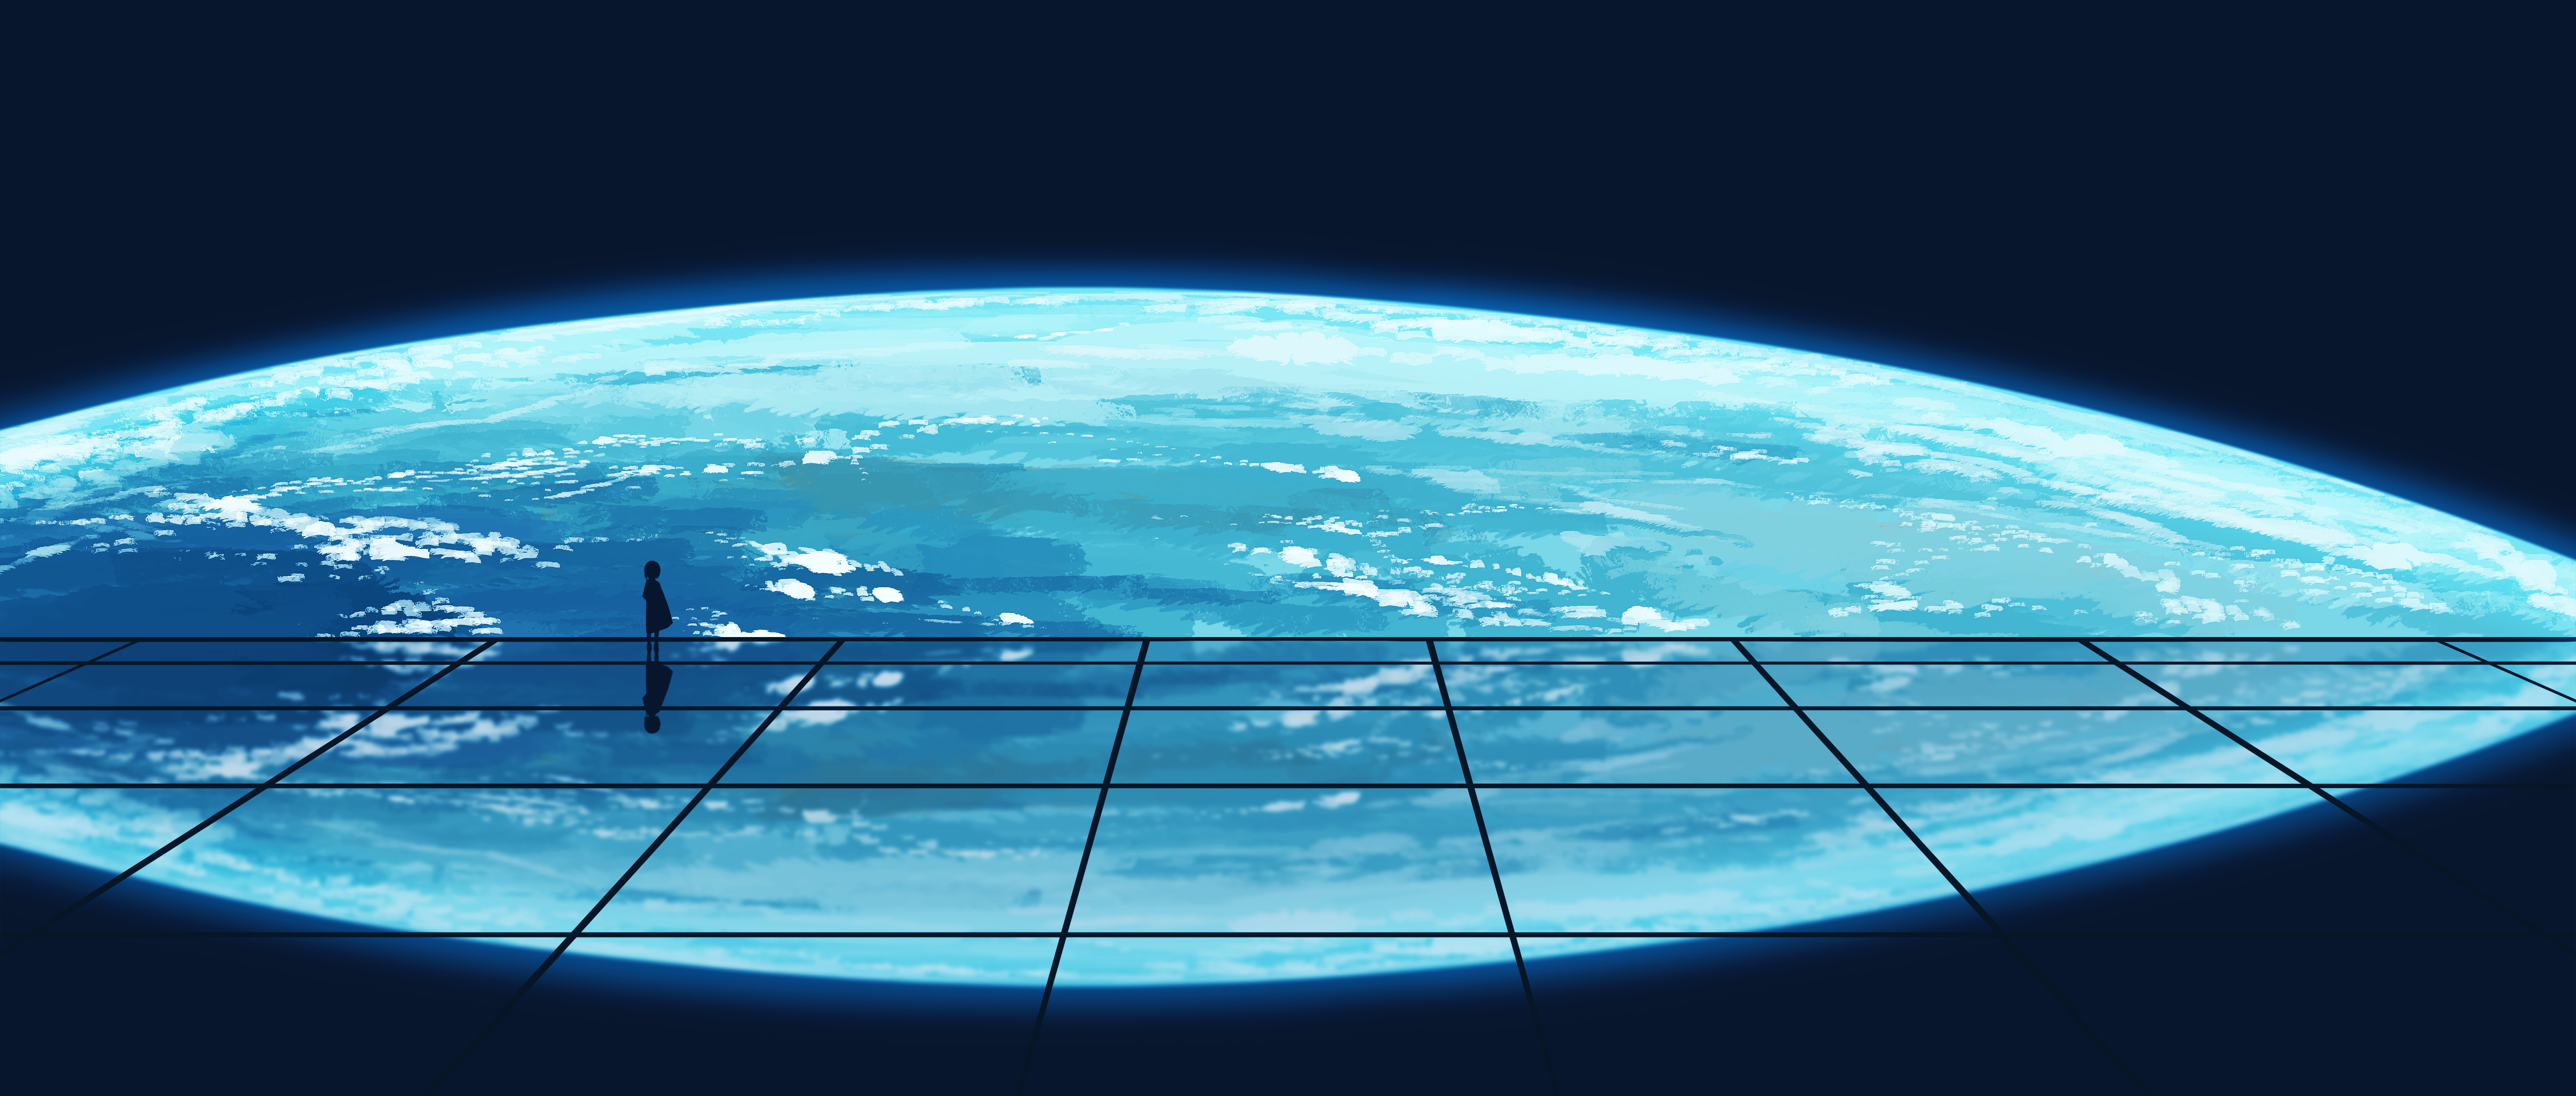 Gracile Digital Art Artwork Illustration Planet Earth Reflection Minimalism Space 5640x2400